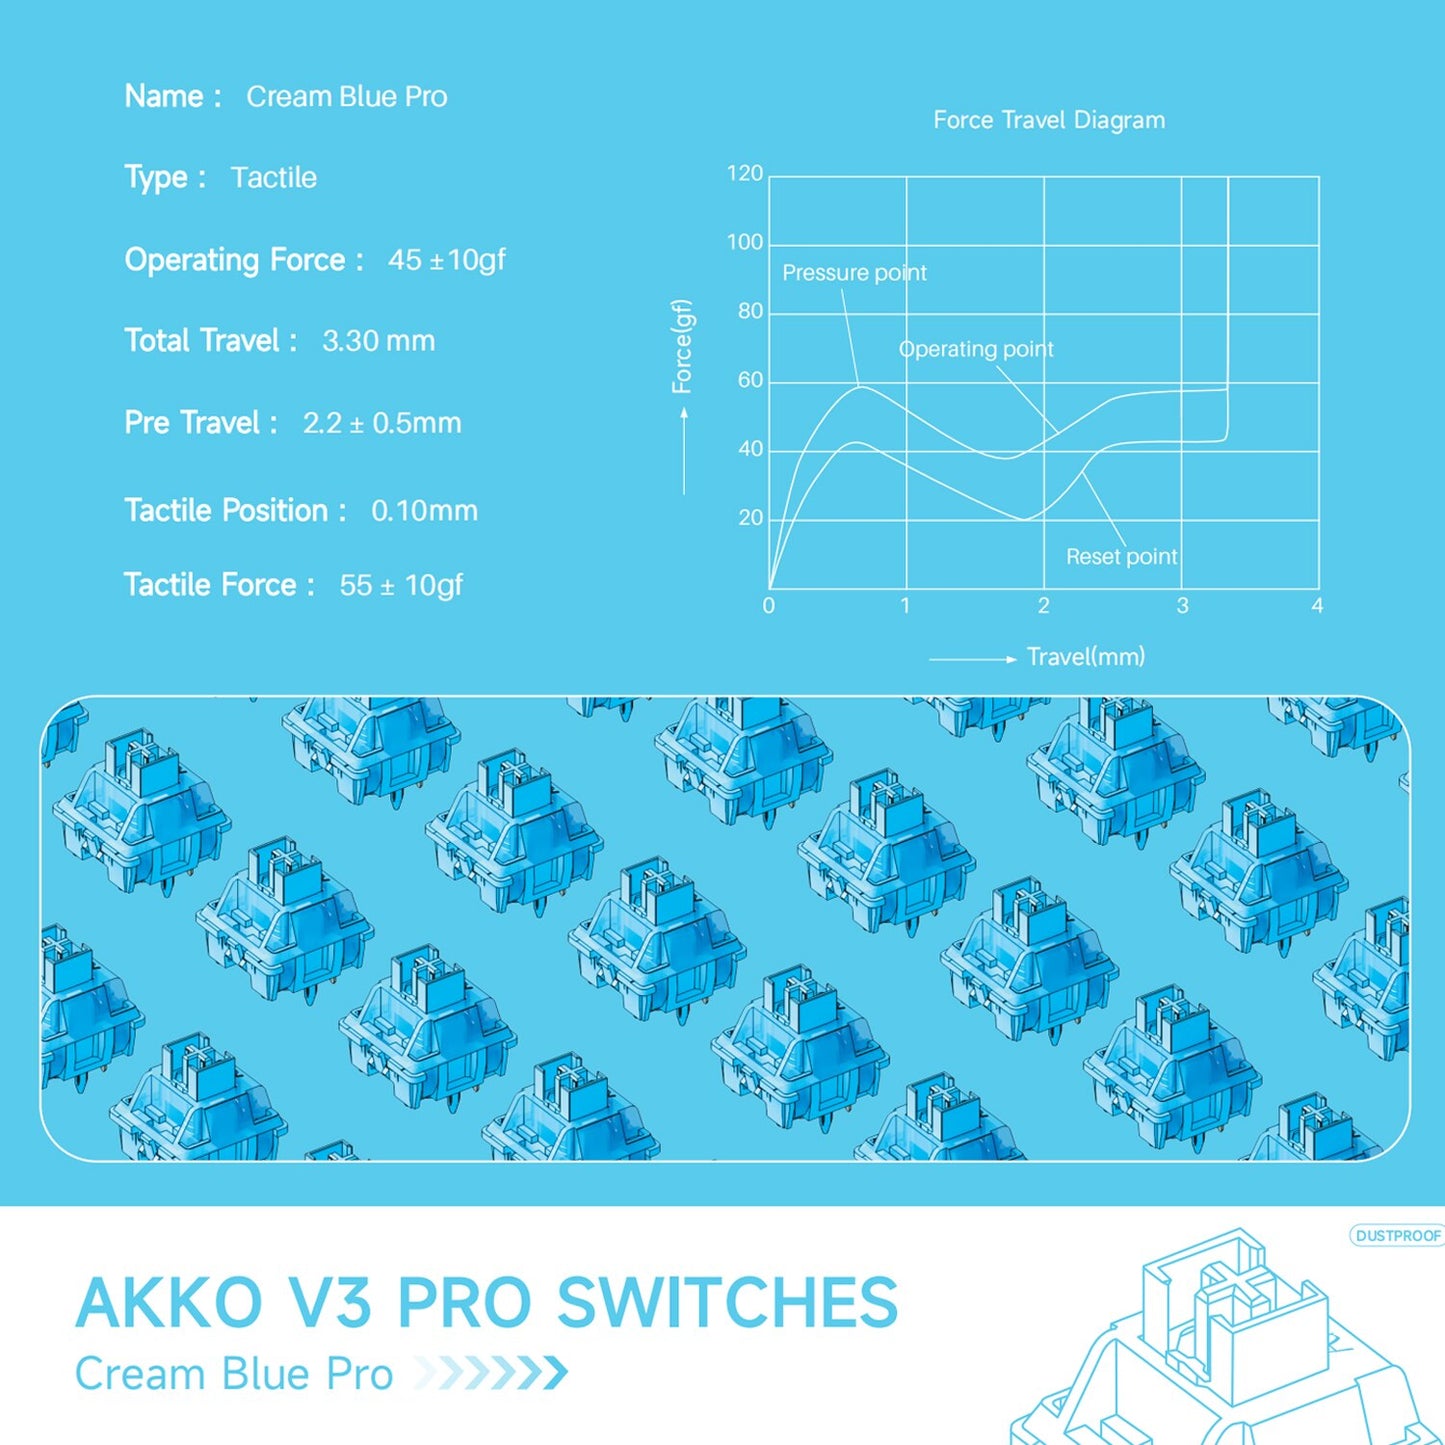 Akko V3/V3 Pro Cream Blue Switch 3 Pin 38gf مفتاح اللمس مع جذع مقاوم للغبار متوافق مع لوحة المفاتيح الميكانيكية MX 